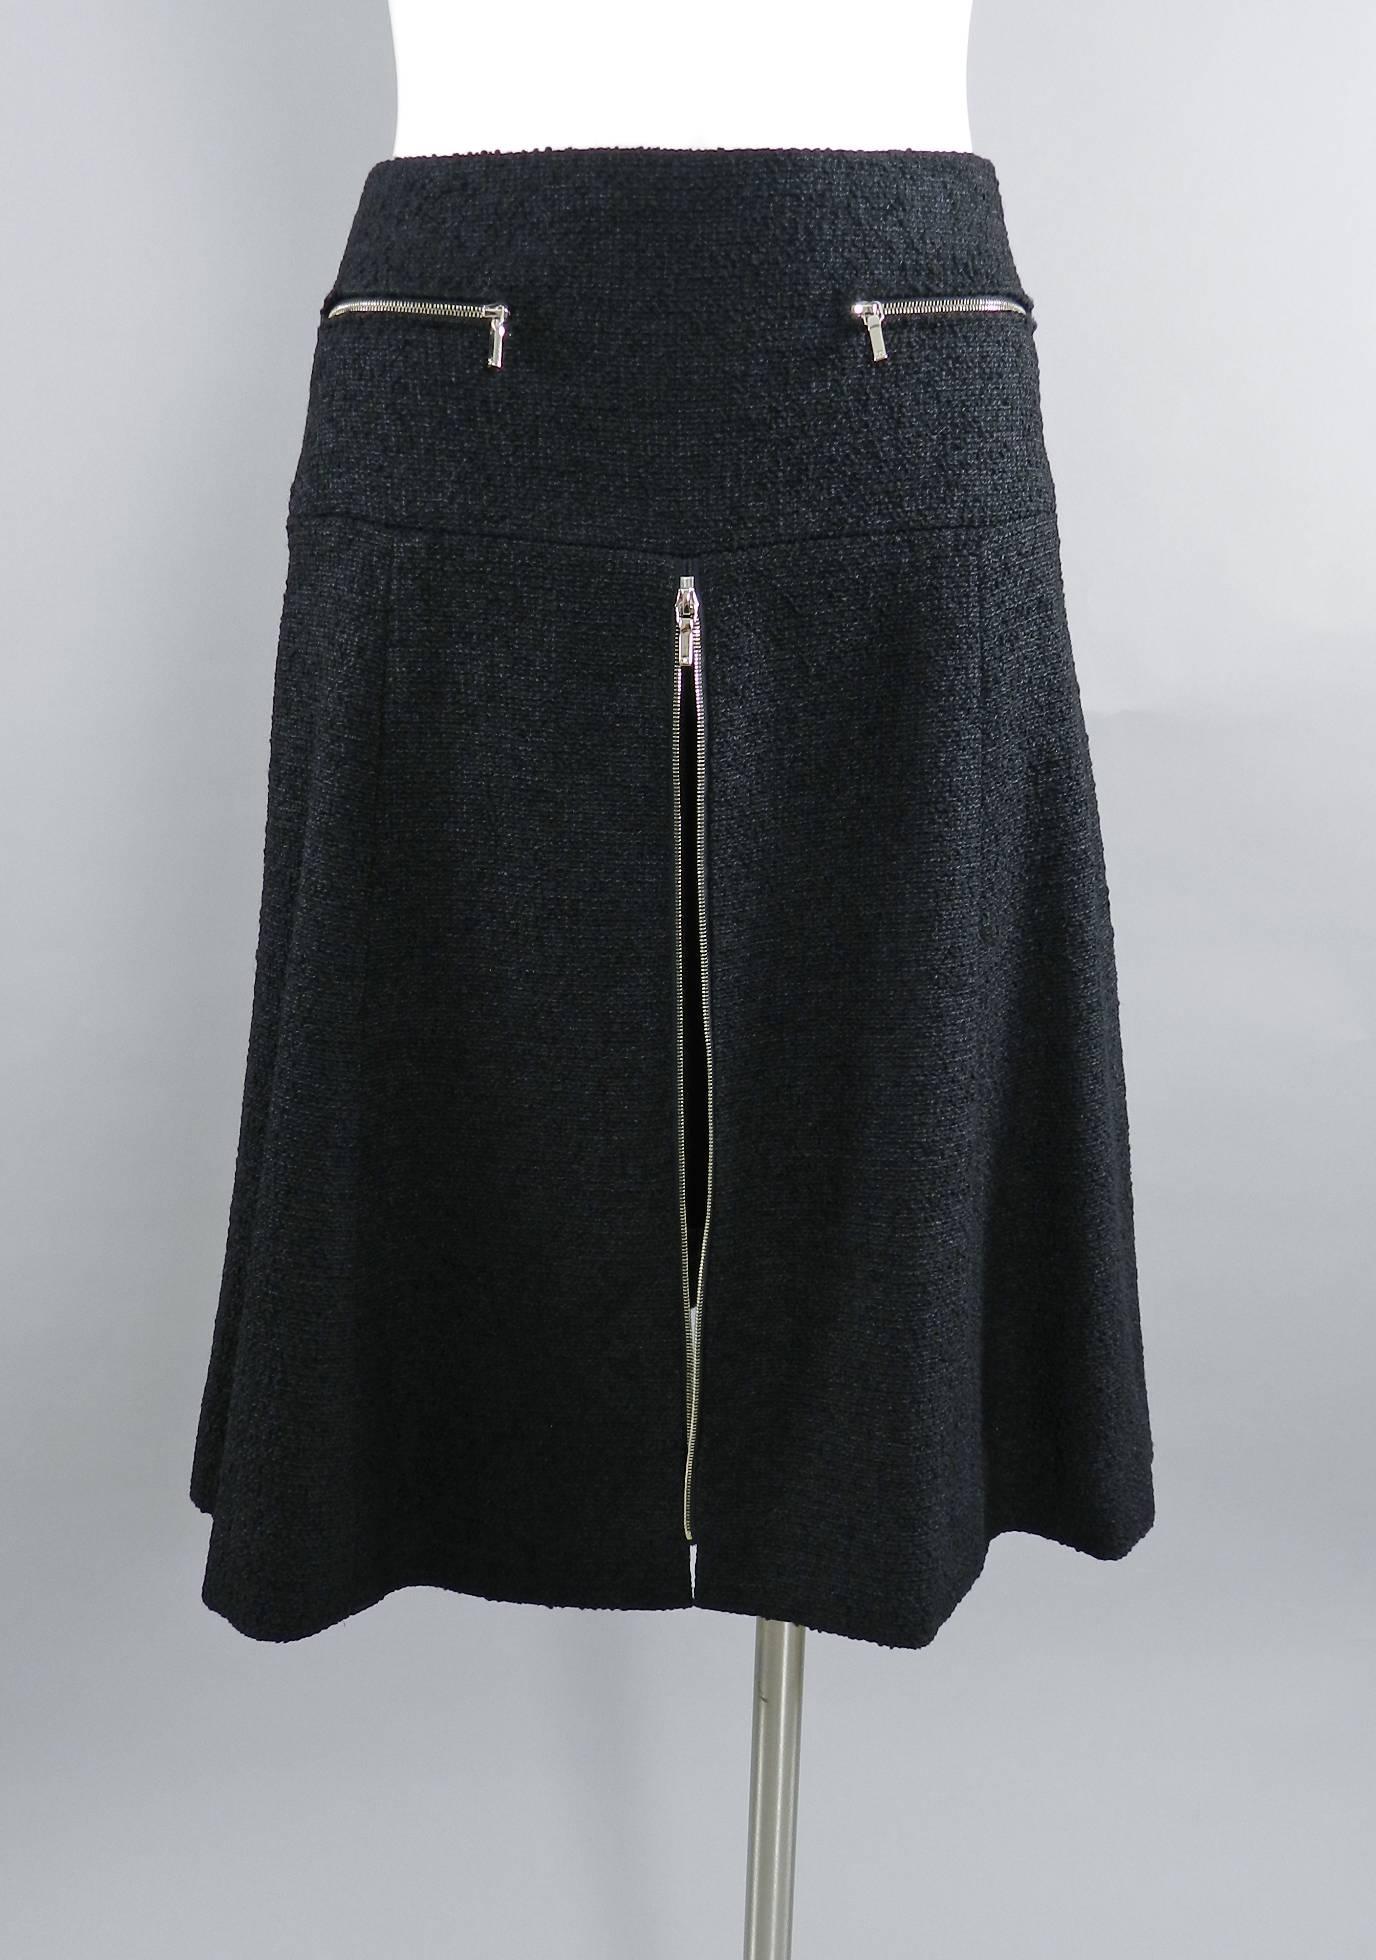 Chanel 13A Black wool Runway Skirt with Silver Zipper Detail 6